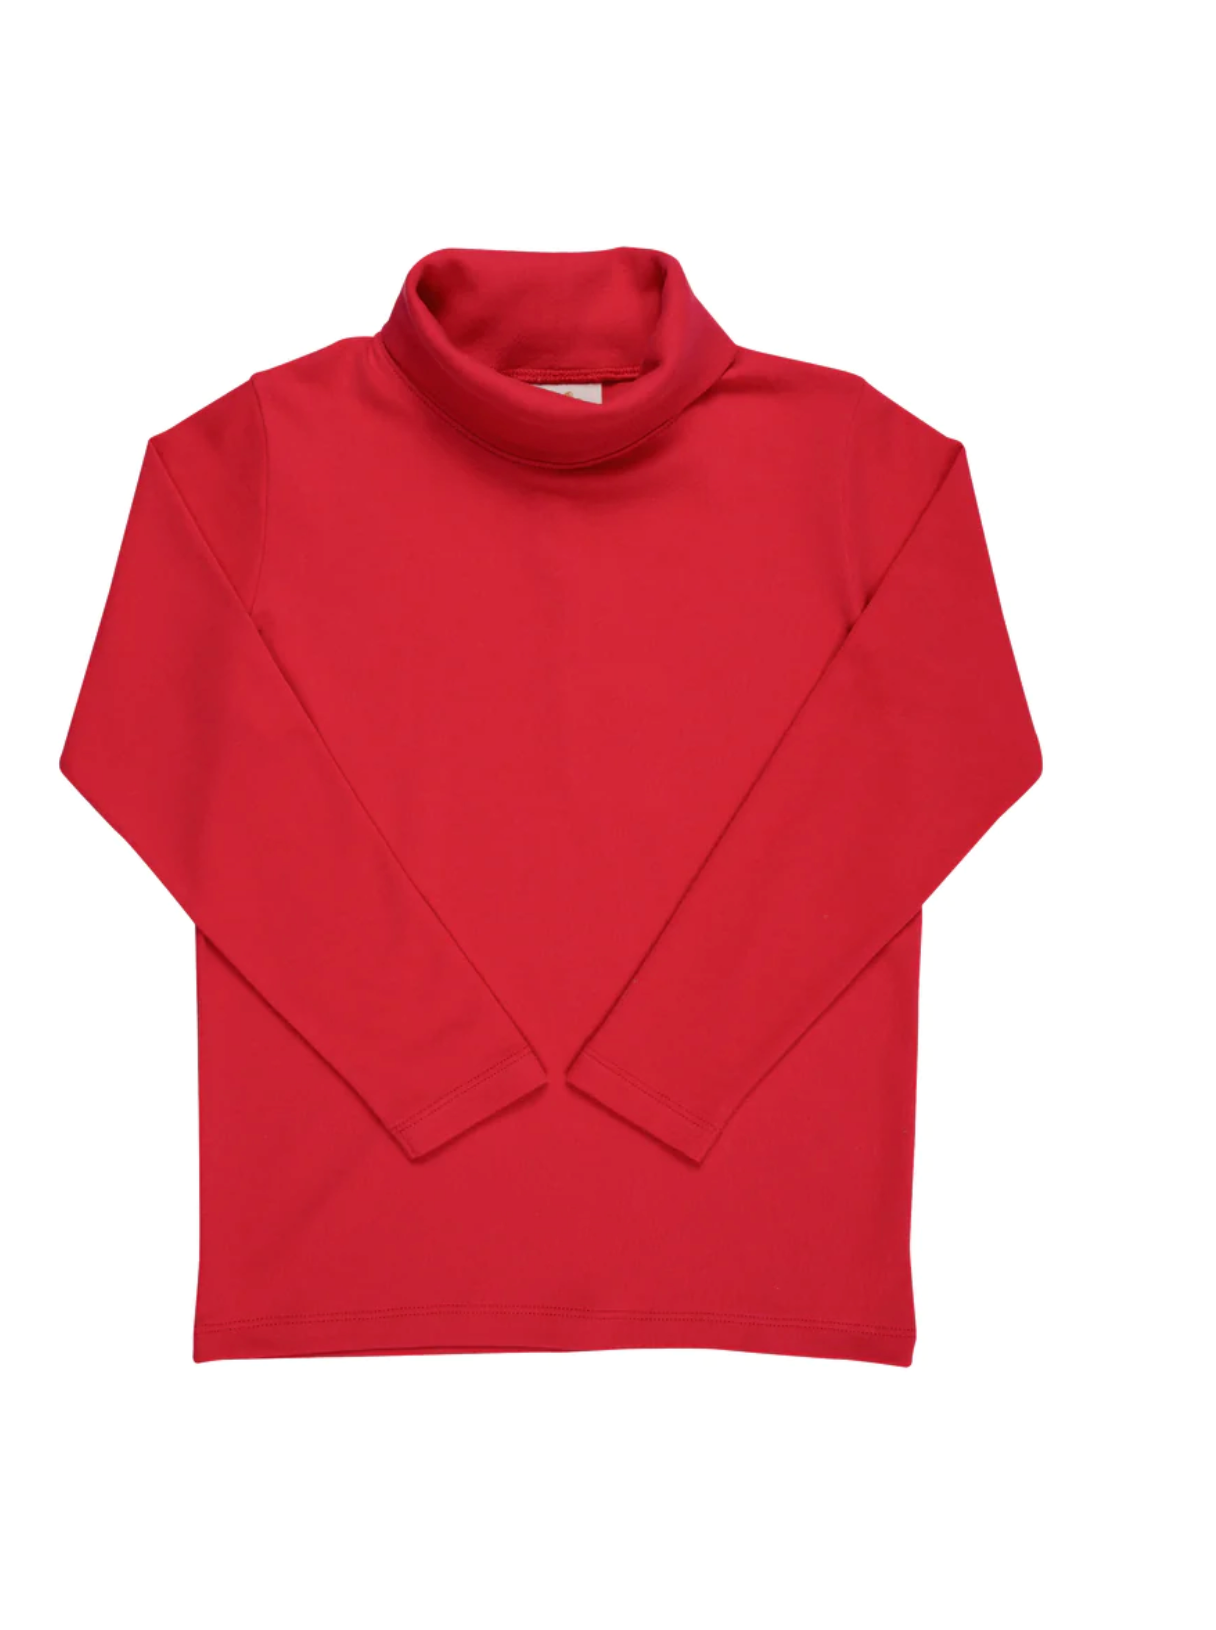 TBBC: Tatum's Turtleneck Shirt Richmond Red (Unisex)